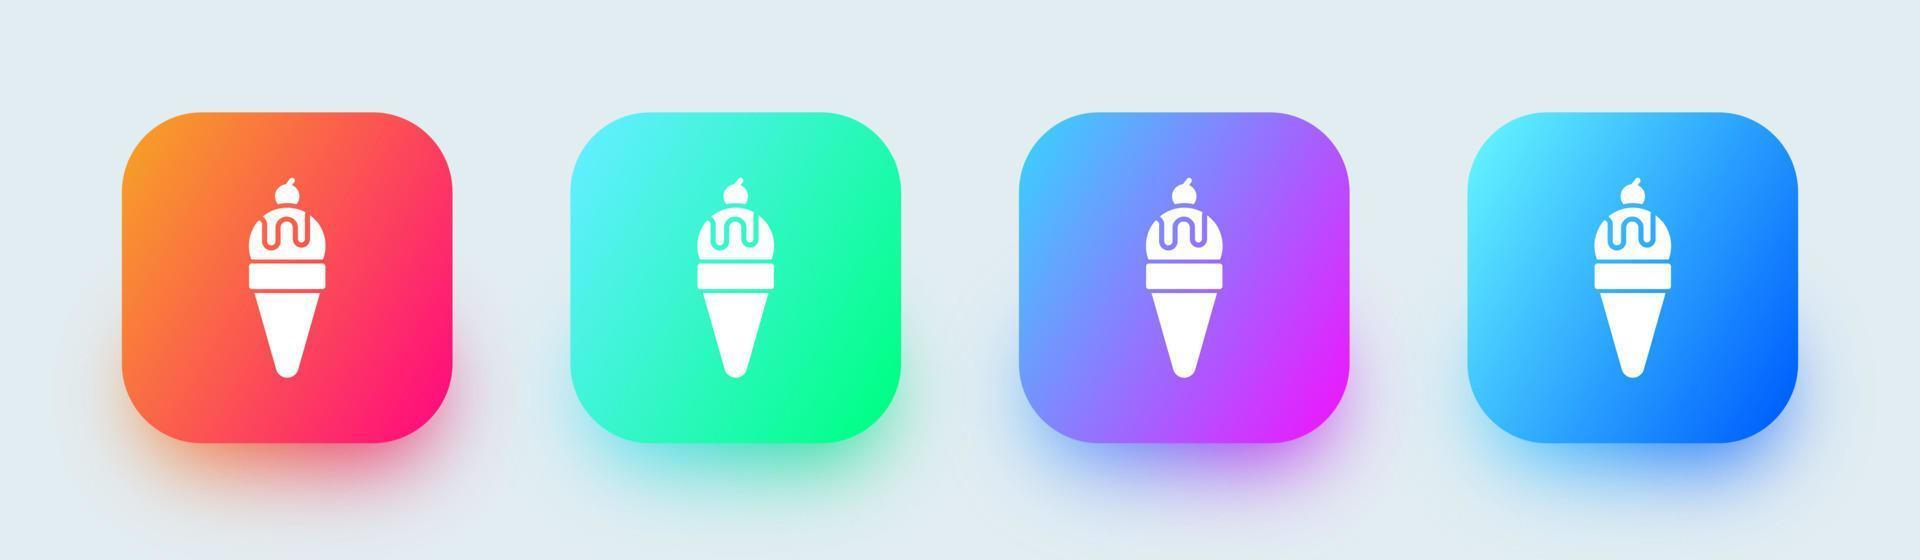 Ice cream solid icon in square gradient colors. Cone signs vector illustration.